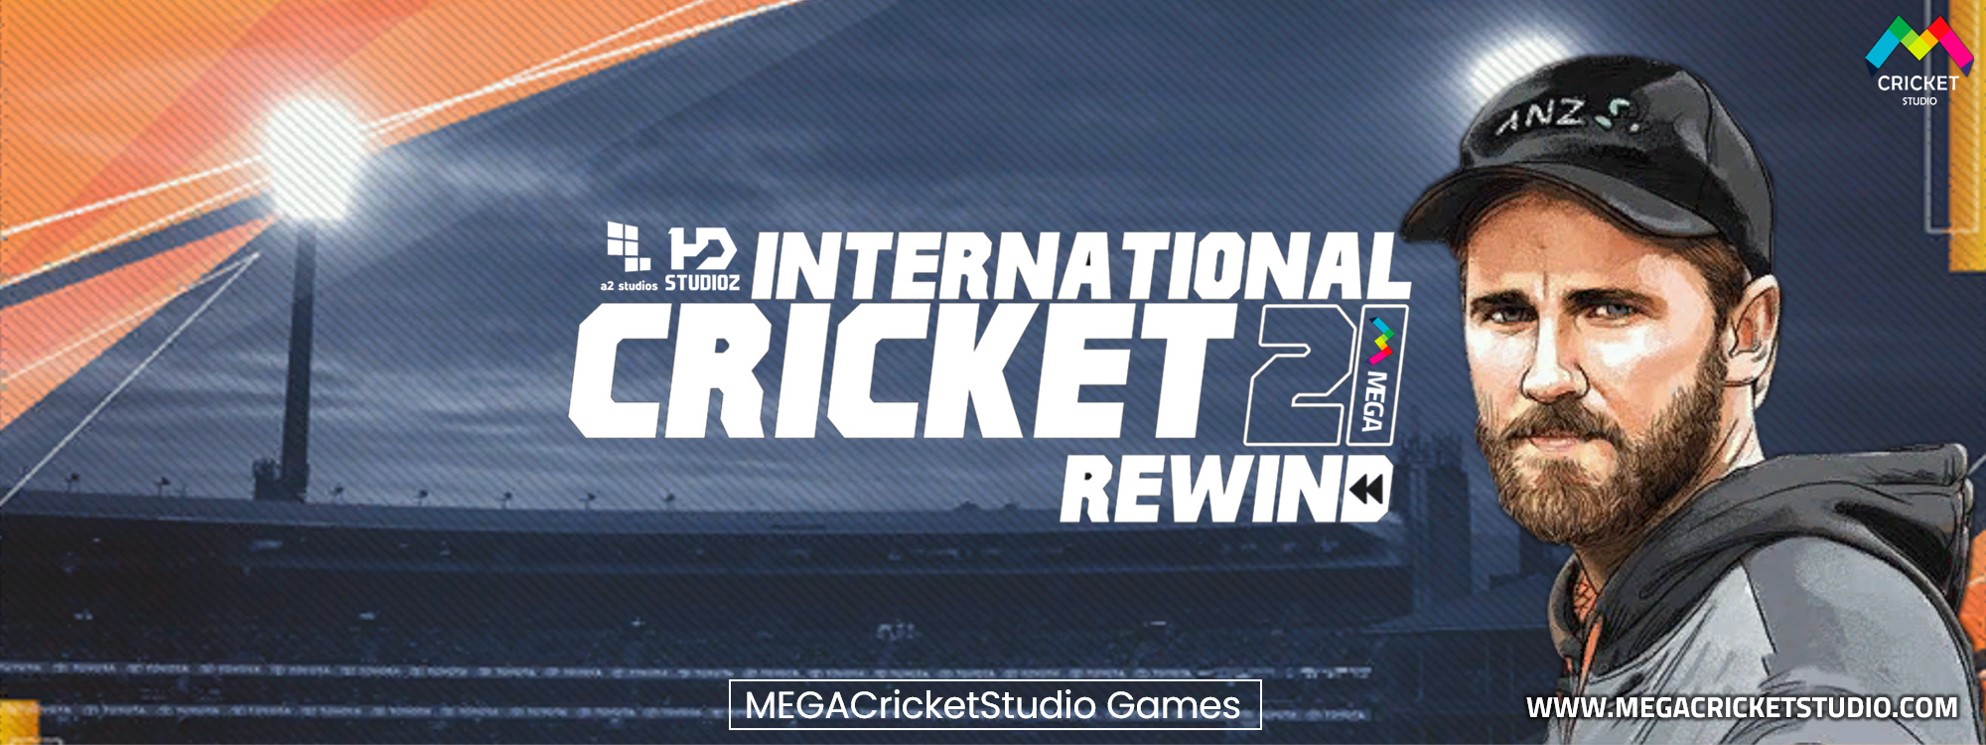 international cricket 2021 rewind patch ea cricket 07